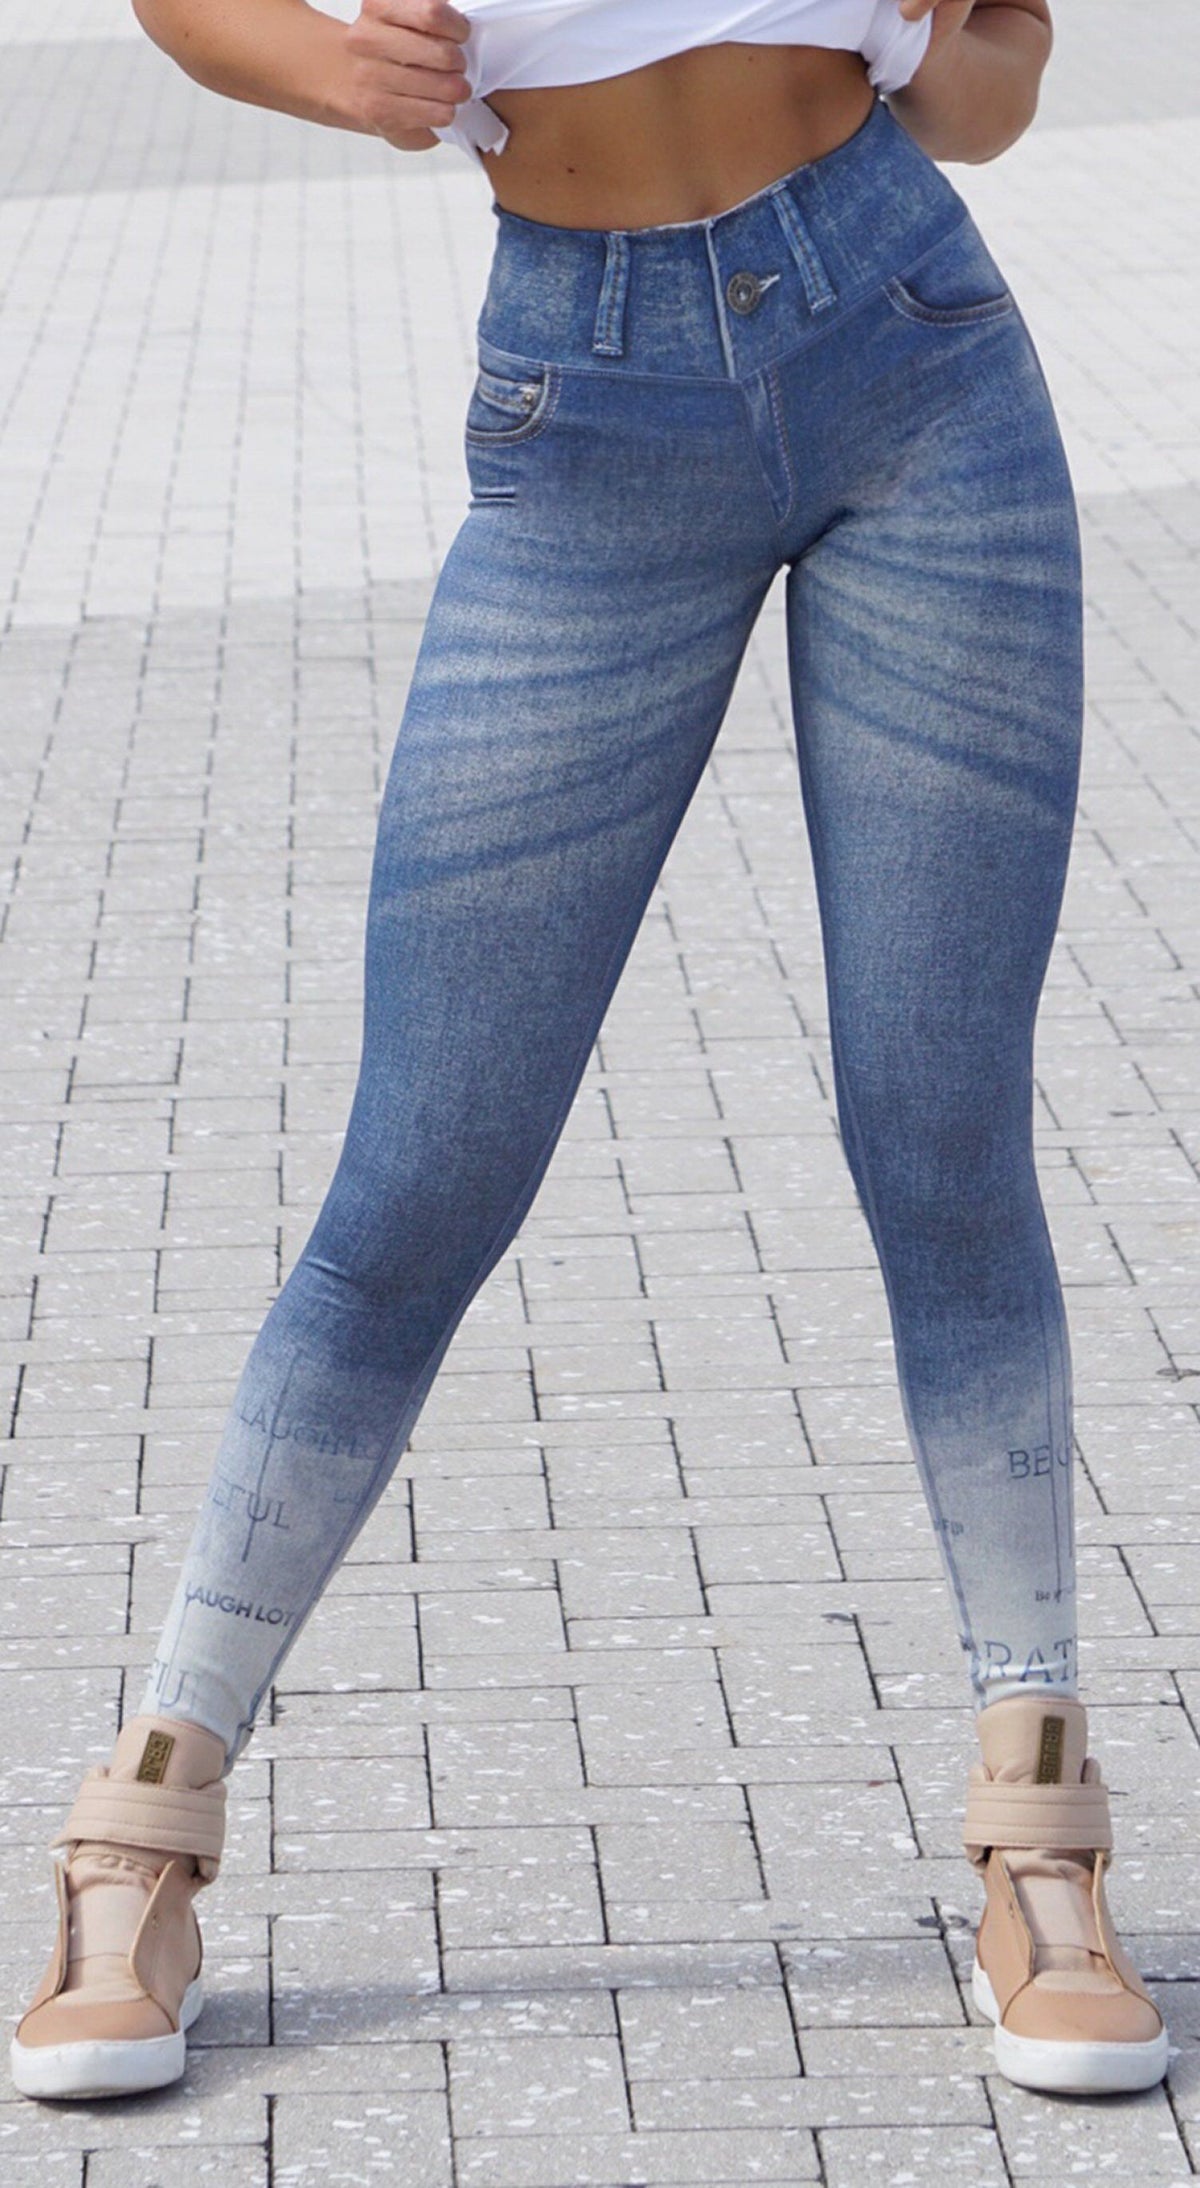 Lam code Bot Butt Lifting Jeans Leggings | Look Very Real | Top Rio Shop